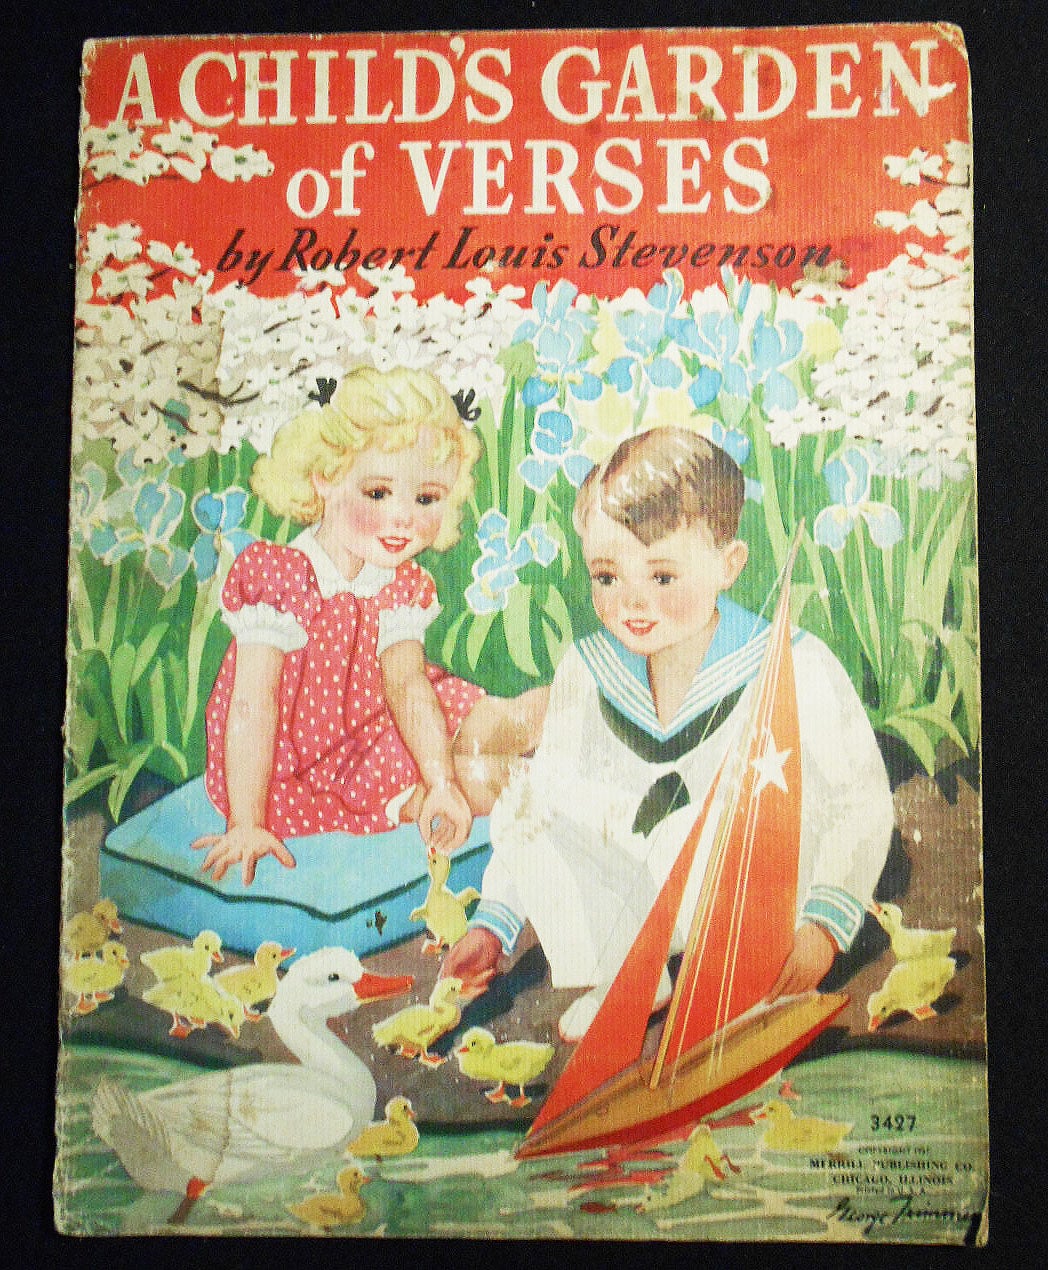 A Child's Garden of Verses. by Robert Louis Stevenson - Hardcover